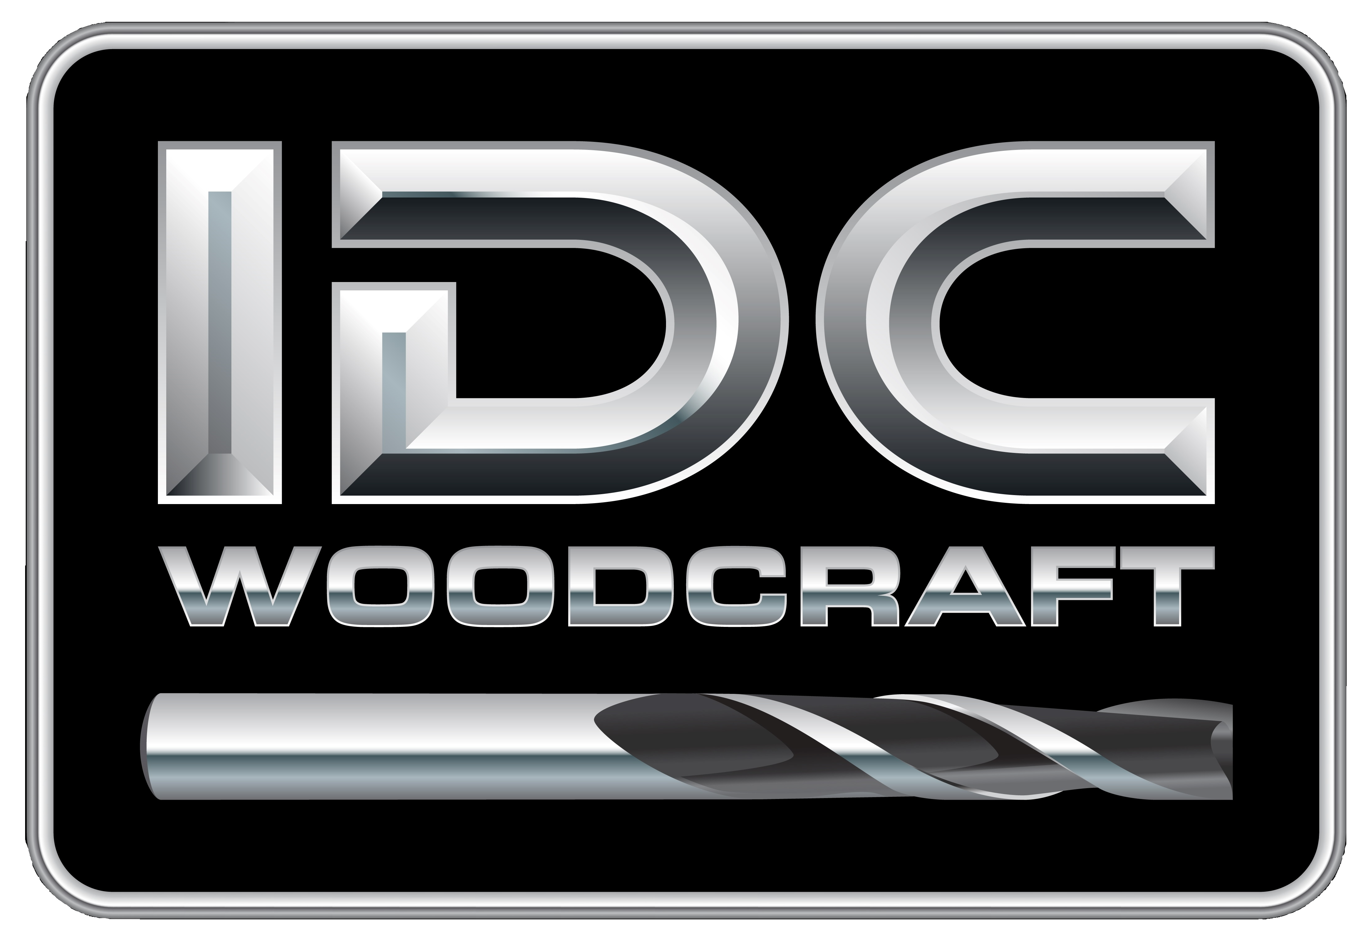 idc woodcraft logo